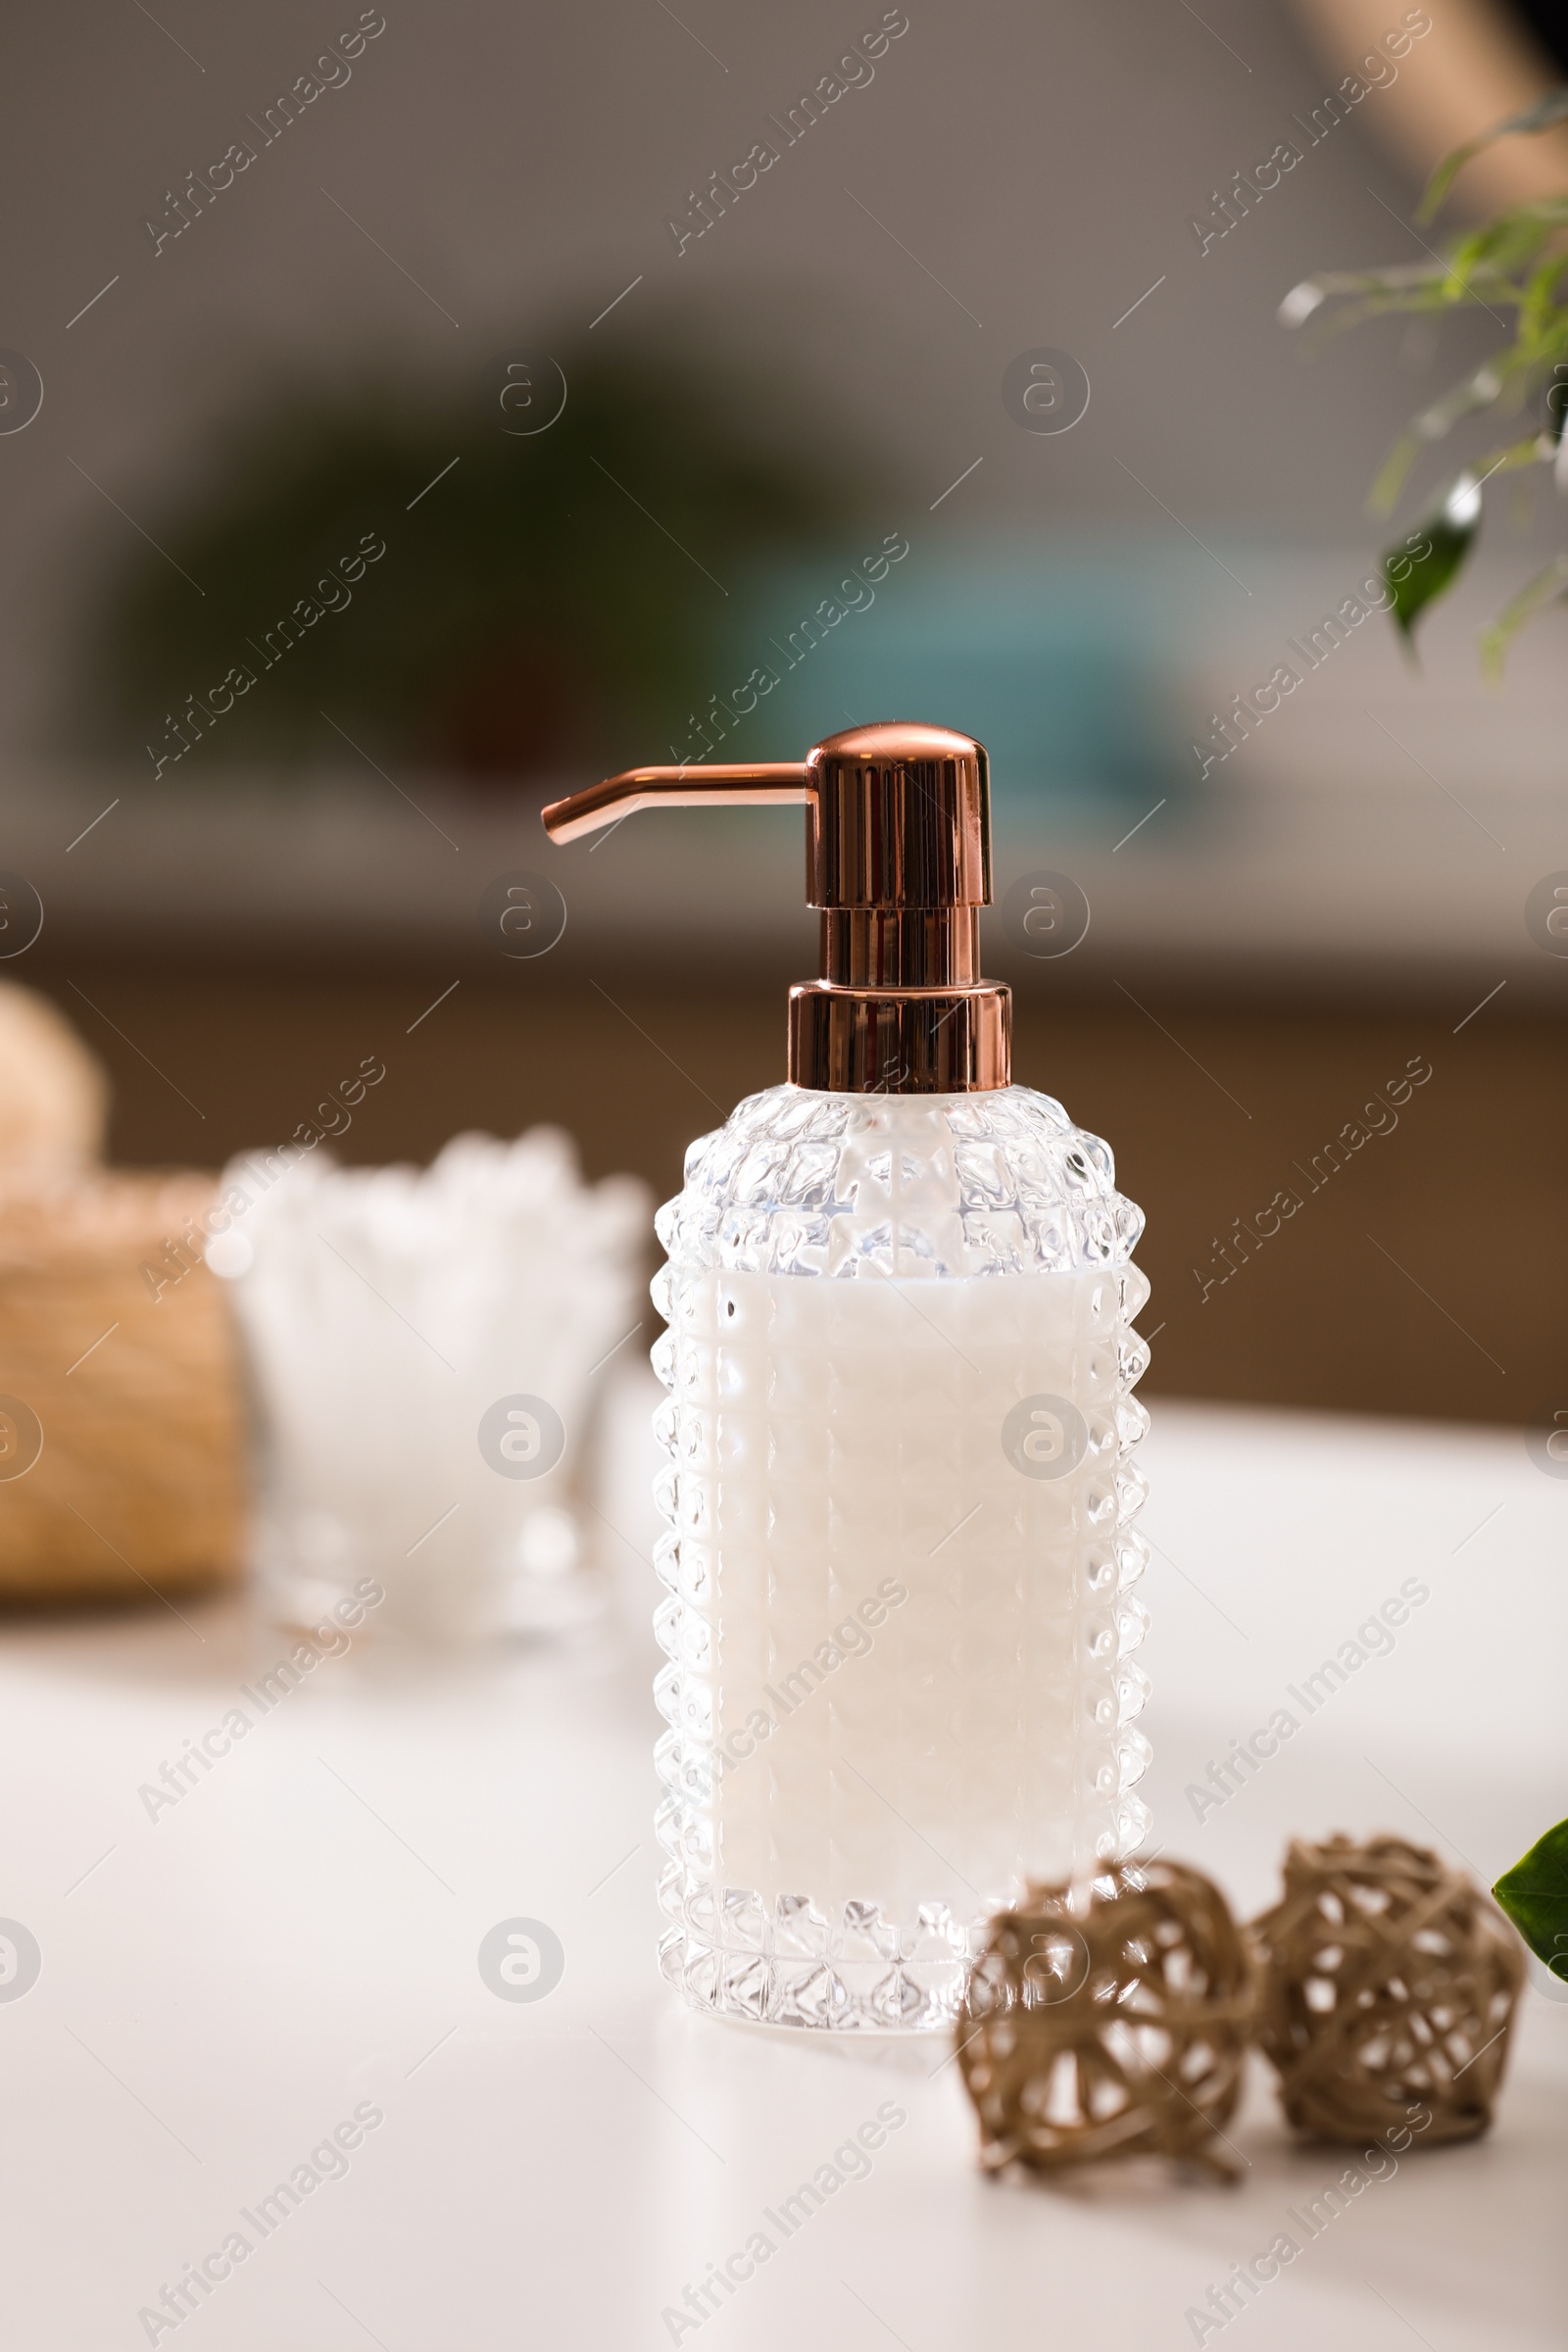 Photo of Stylish soap dispenser on white table indoors